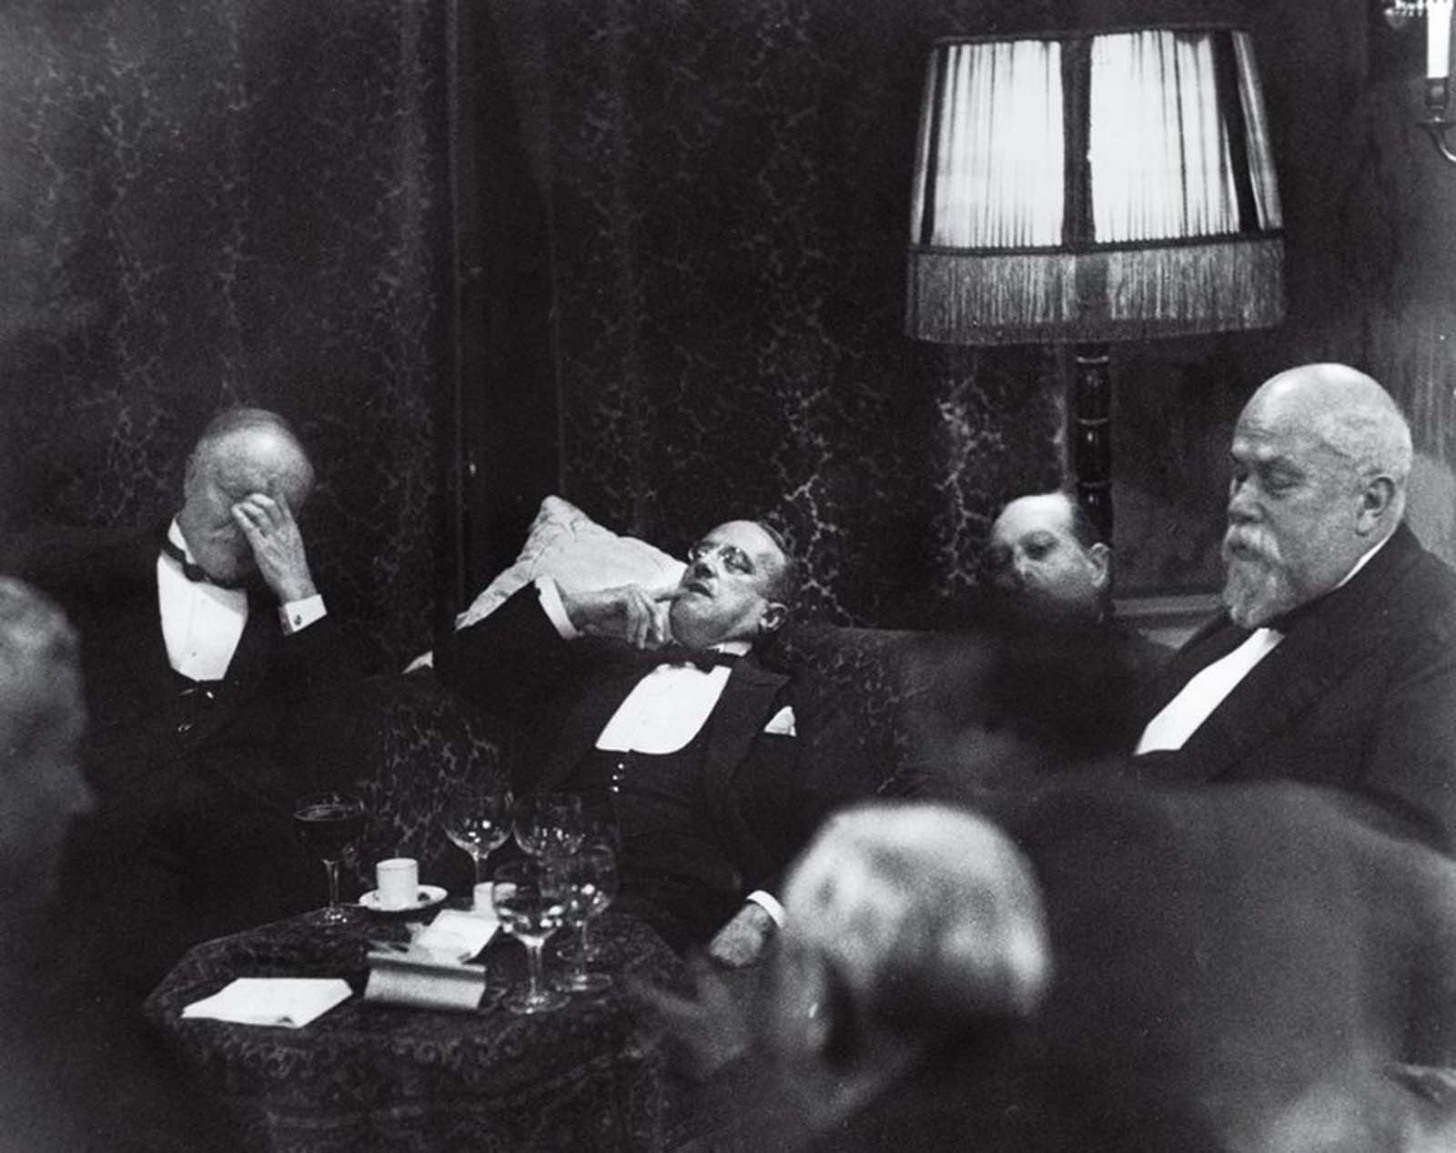 Hague, 1930, reparation negotiations